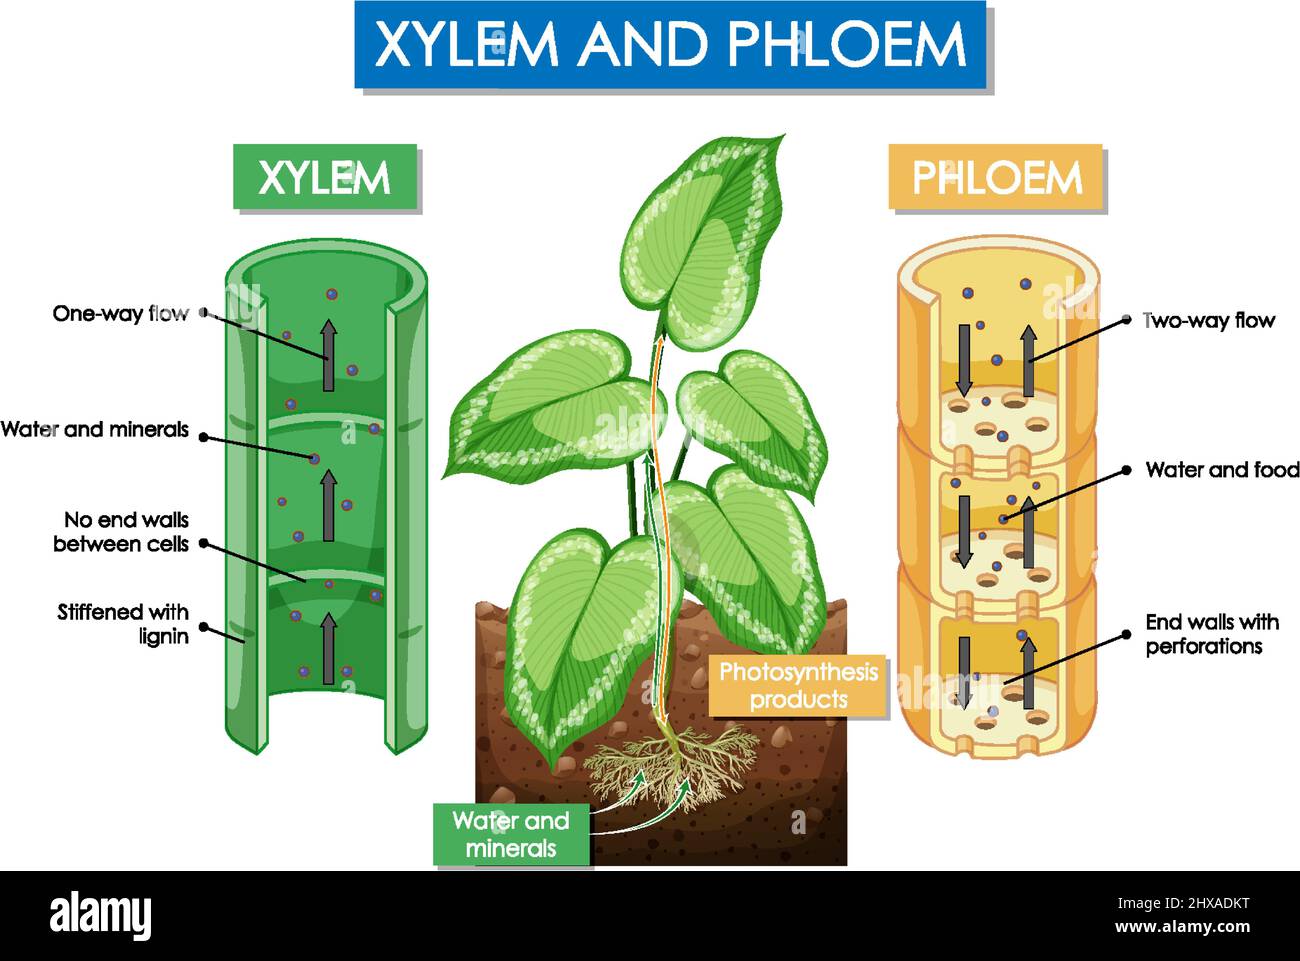 xylem and phylum